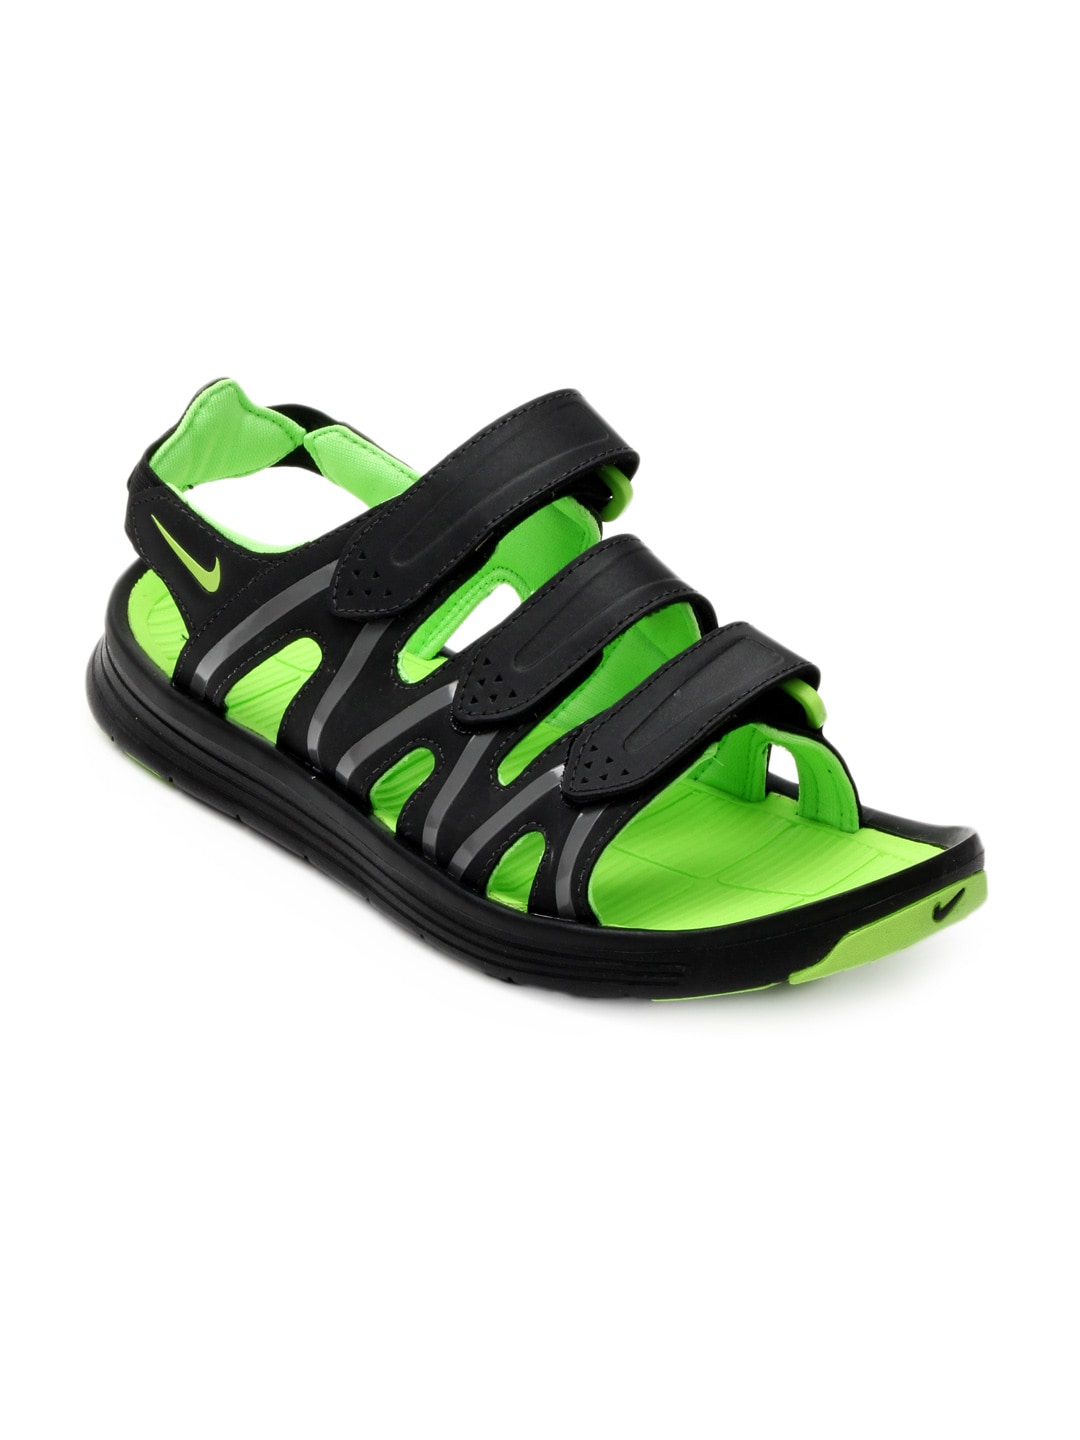 Nike Men Black and Green Sandals